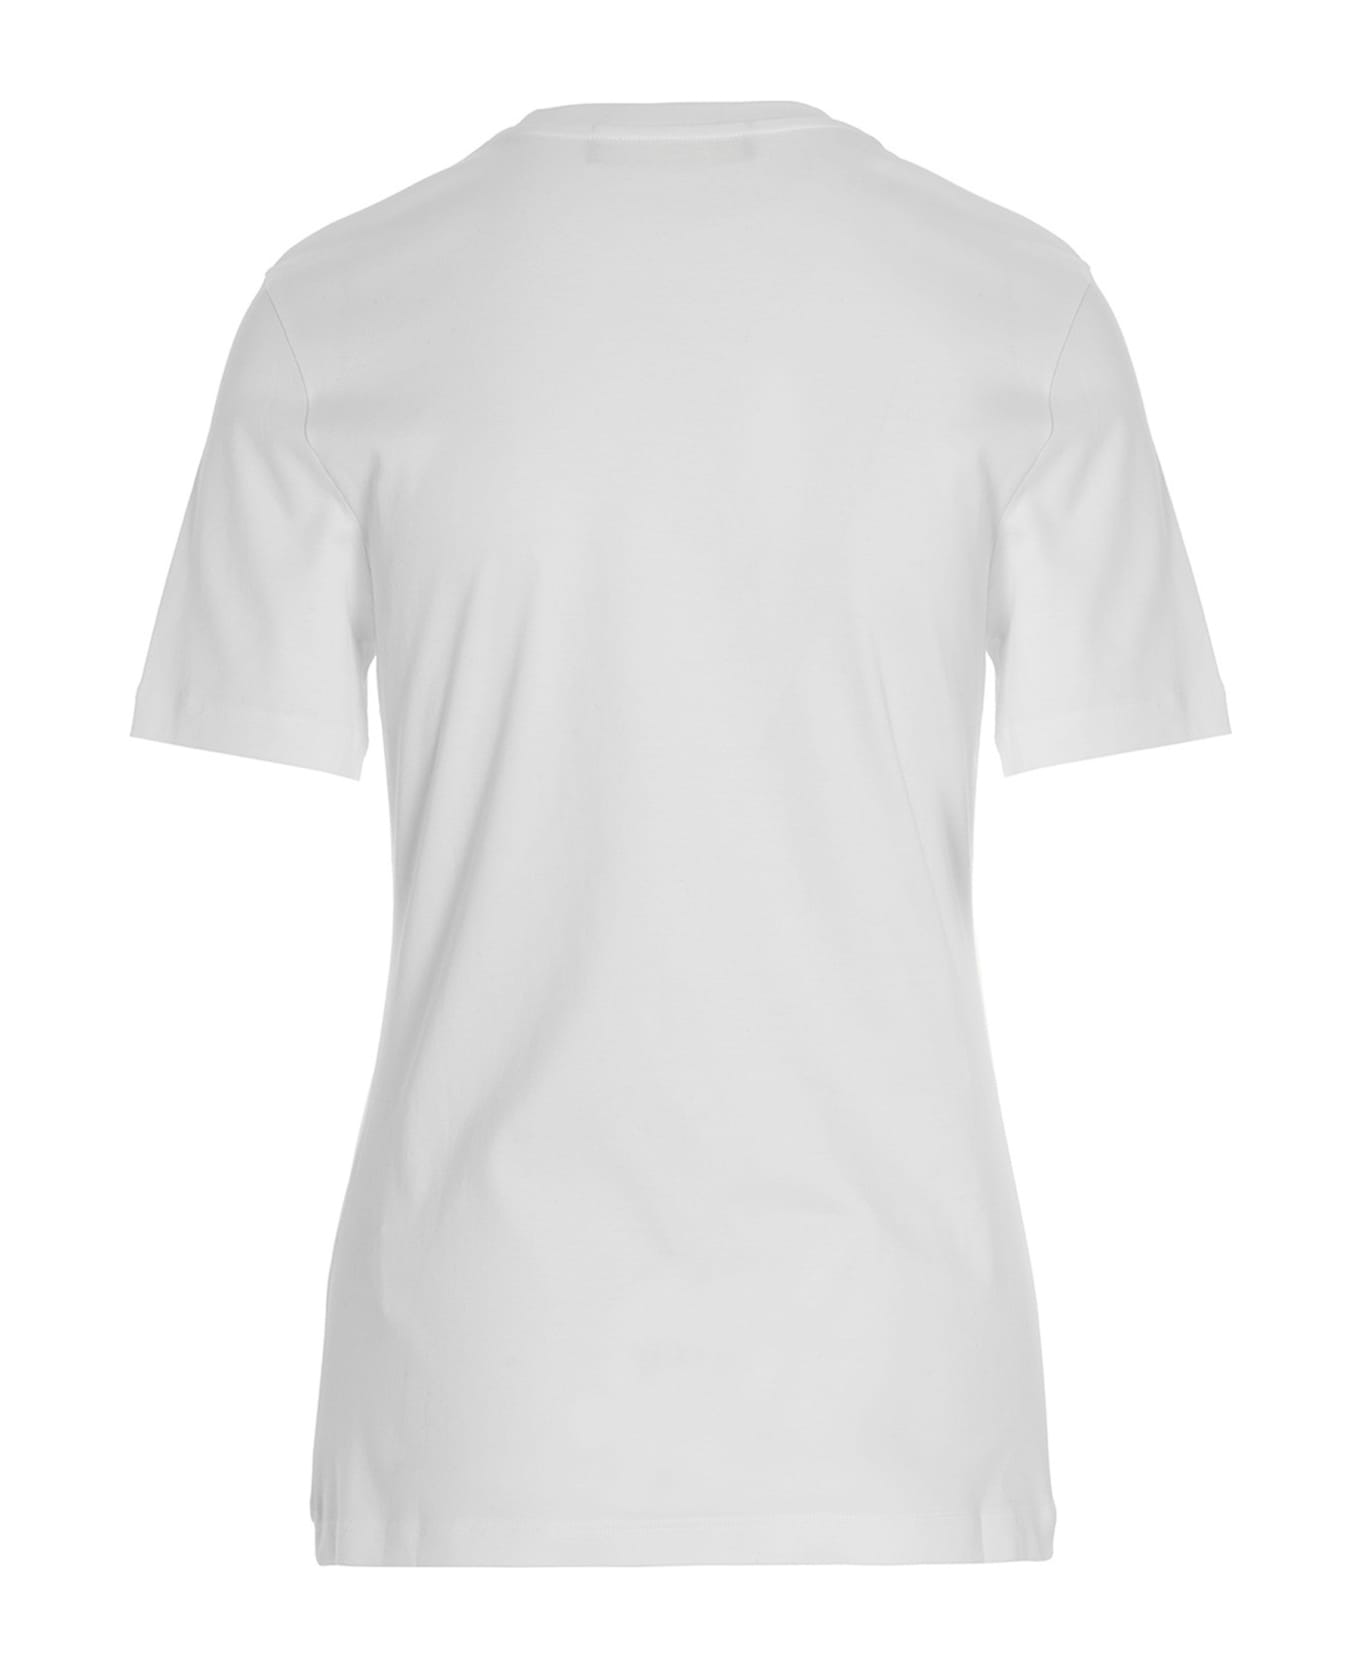 Versace Cotton Logo T-shirt - White Tシャツ